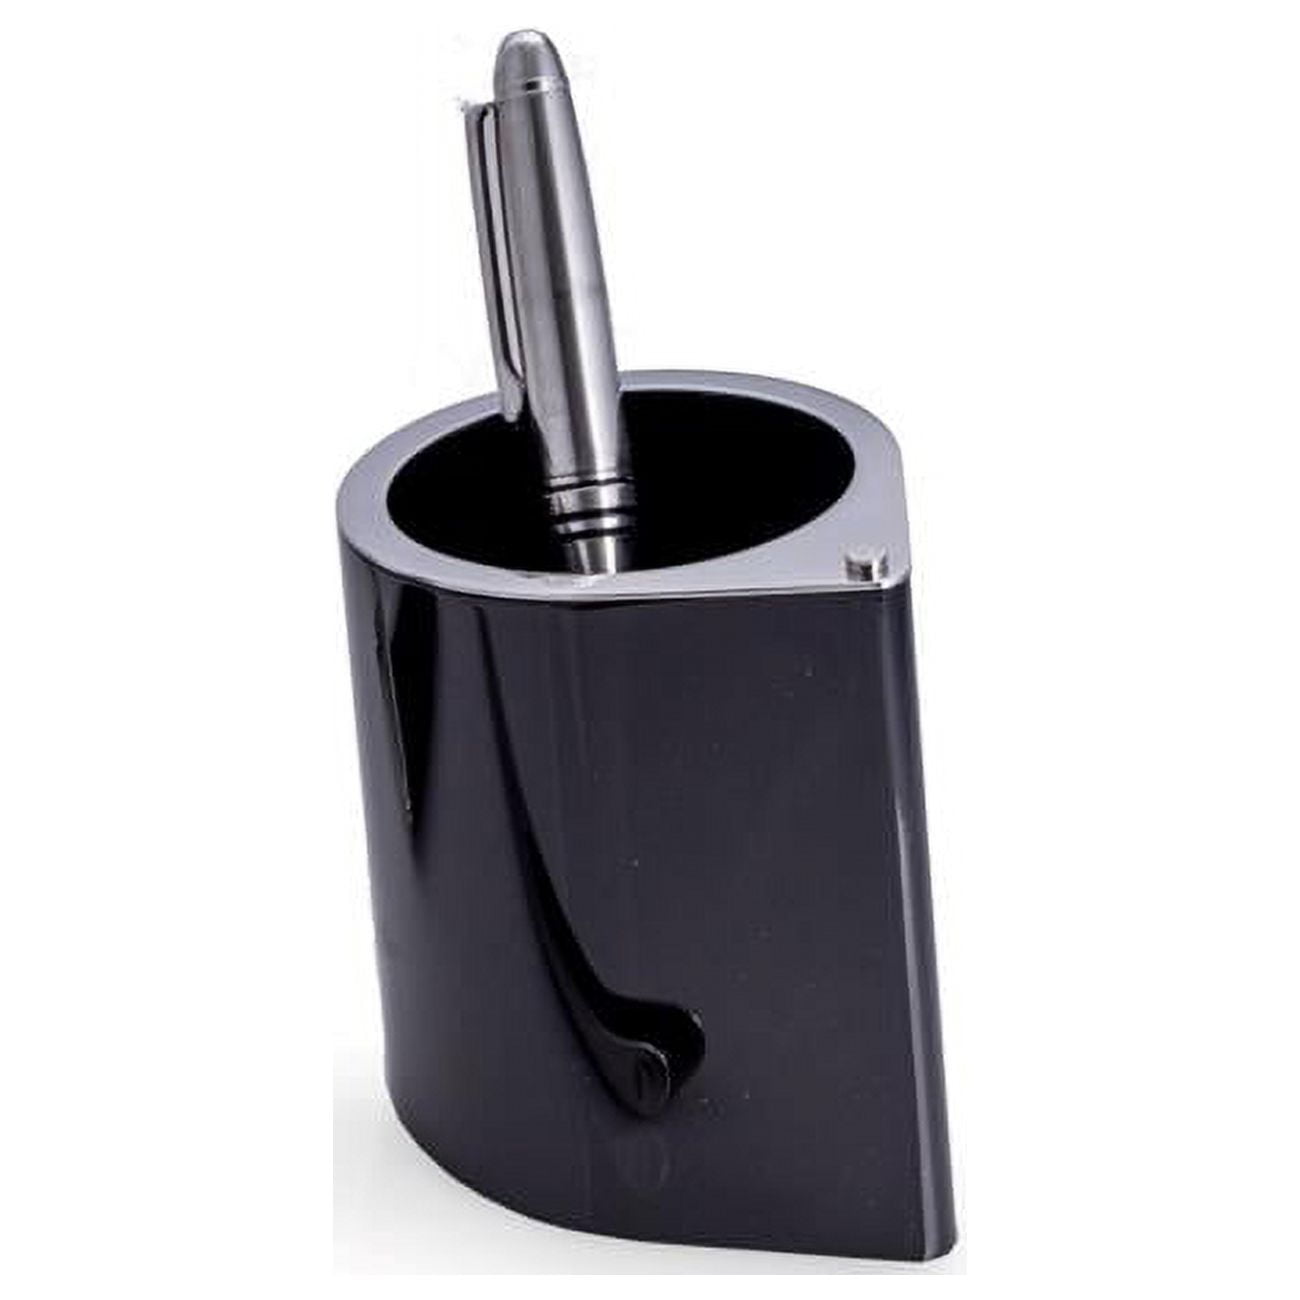 Bey-berk International D175 Stainless Steel Pen Cup With Enamel Finish - Black & Silver